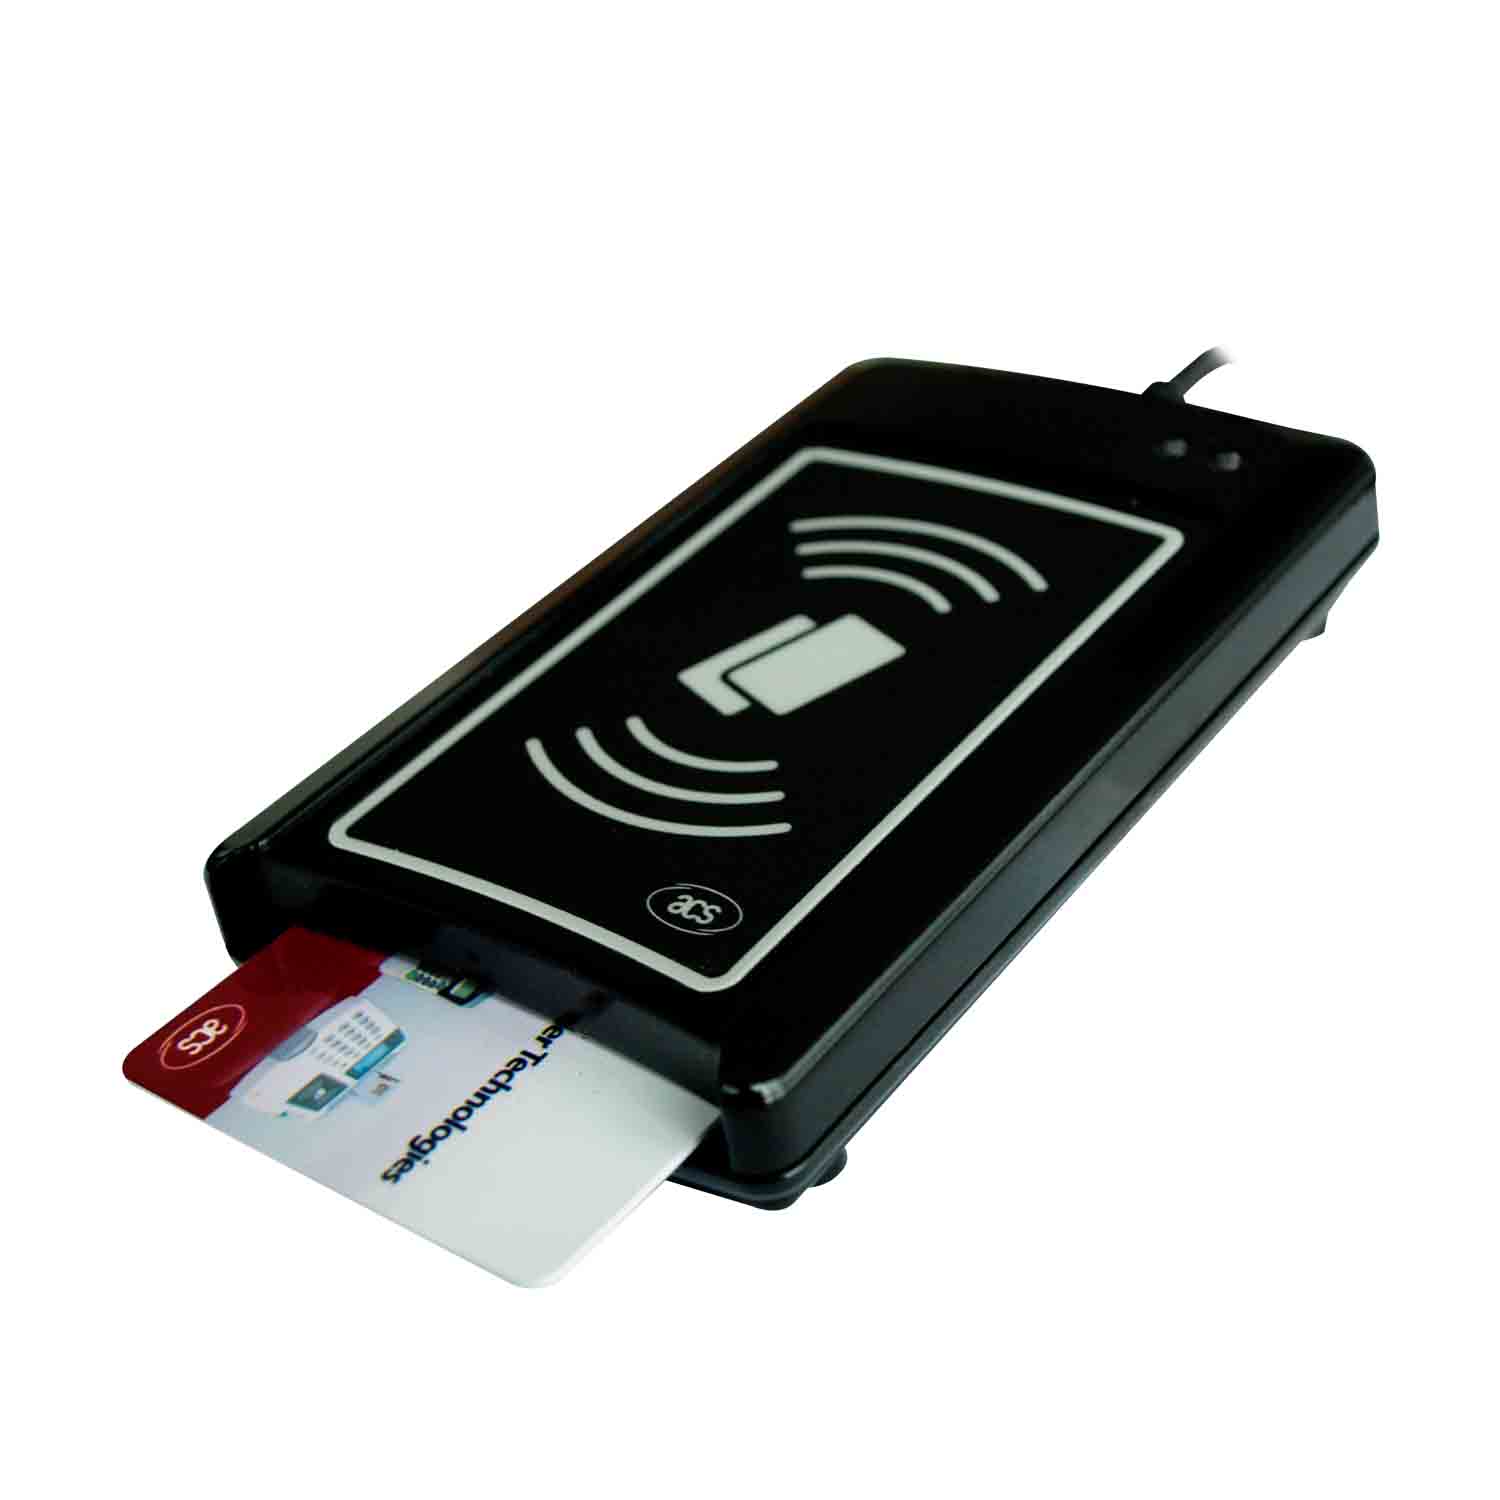 ACR-128U DualBoost -  จำหน่าย เครื่องพิมพ์บัตร พีวีซี Hiti พิมพ์บัตรประจำตัว บัตรนักเรียน บัตรพนักงาน ใช้กับบัตรพลาสติก บัตรแถบแม่เหล็ก บัตรสมาร์ทการ์ด บัตร RFID เครื่องอ่านบัตรสมาร์ทการ์ด บัตรประชาชน เครื่องอ่าน RFID เครื่องสแกนนิ้ว ระบบควบคุมการเปิดปิดประตู และอุปกรณ์รองรับ   Card Printer & Accessories เครื่องพิมพ์บัตร PVC 